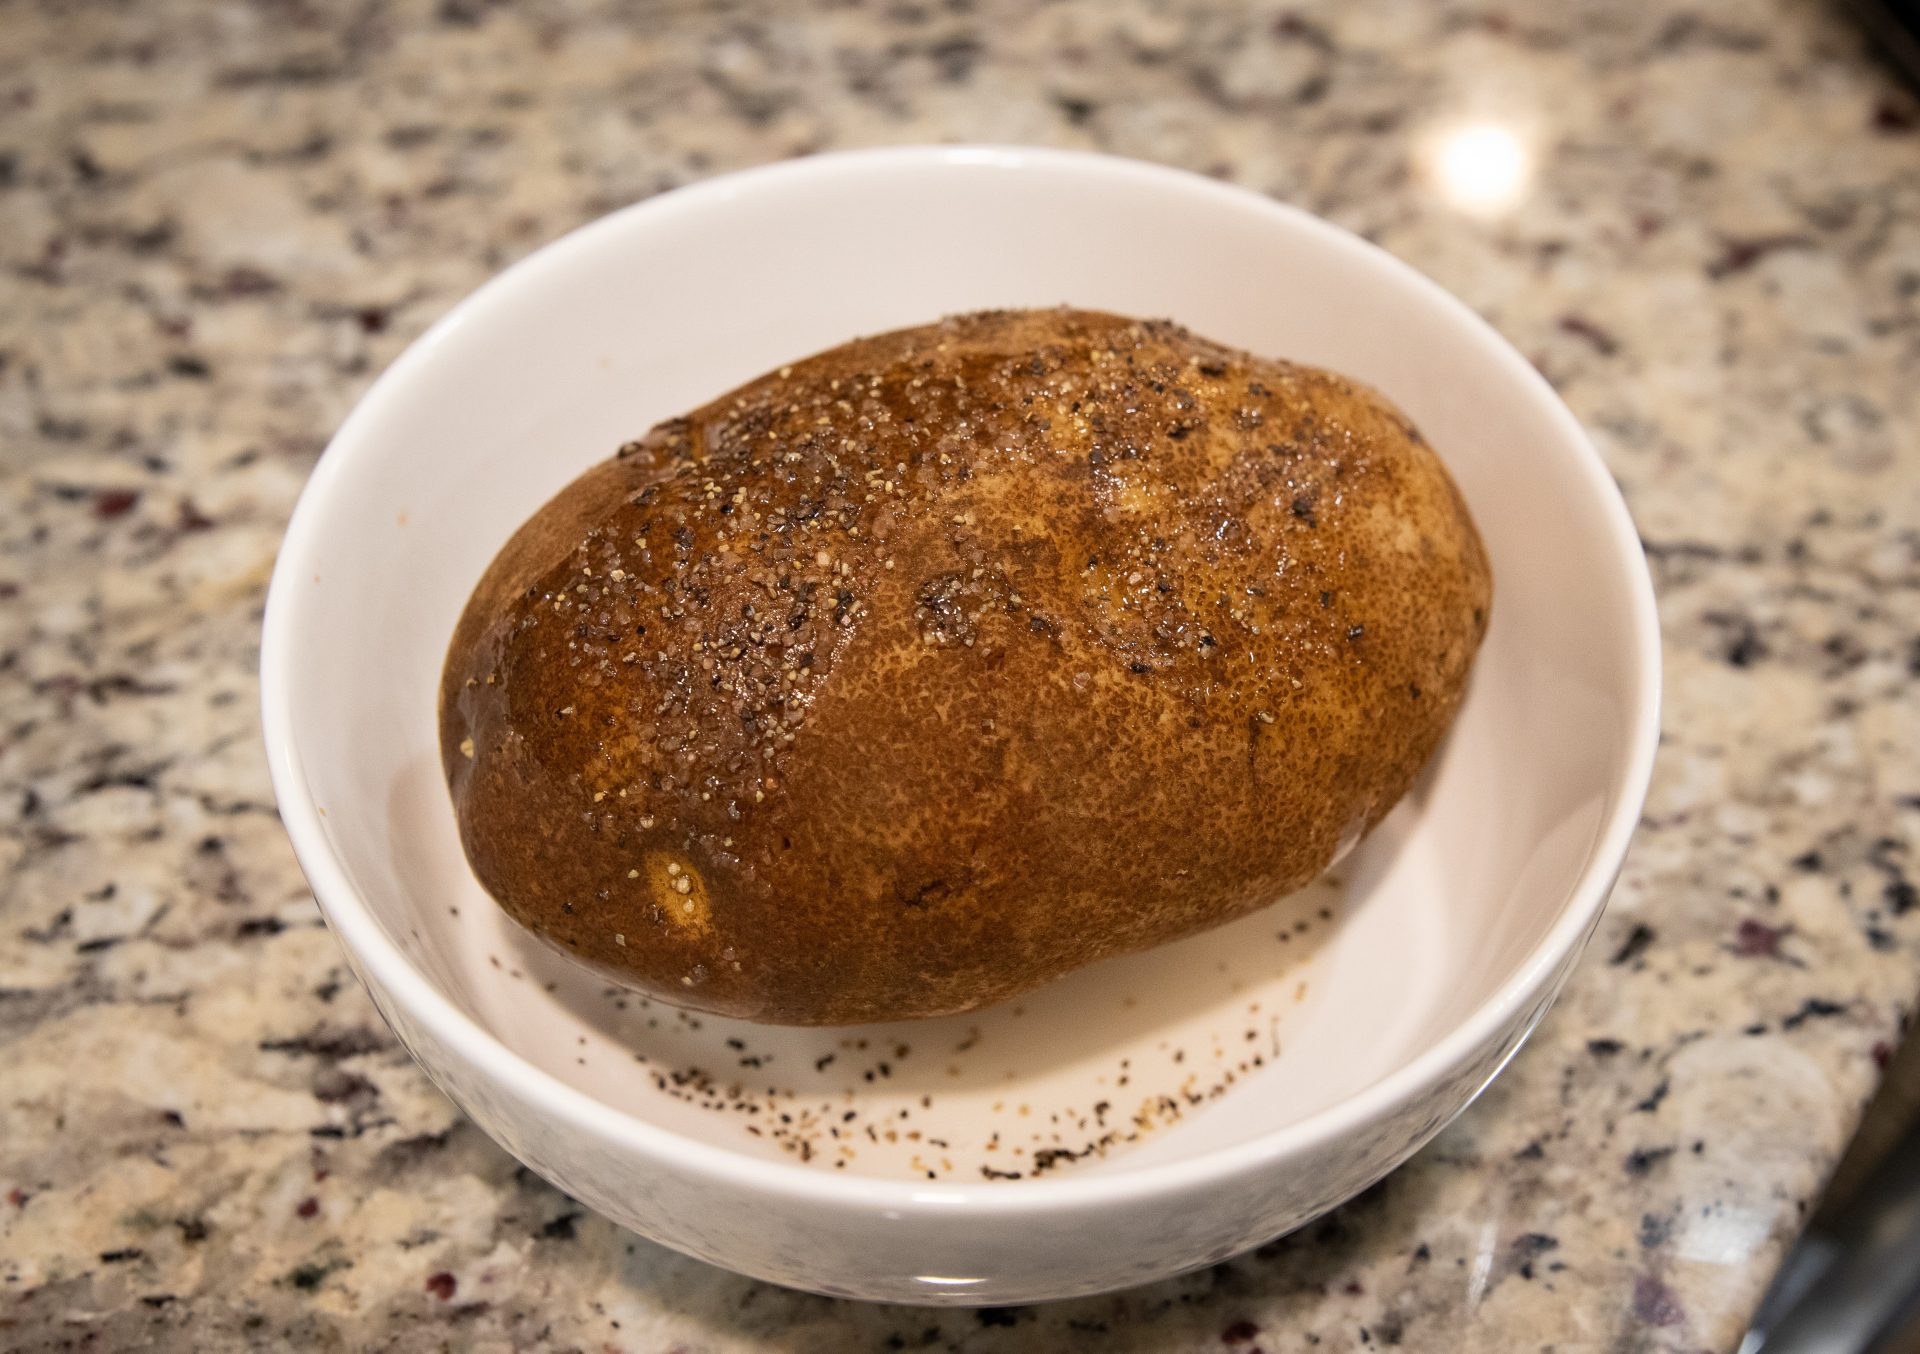 Microwaved potato.